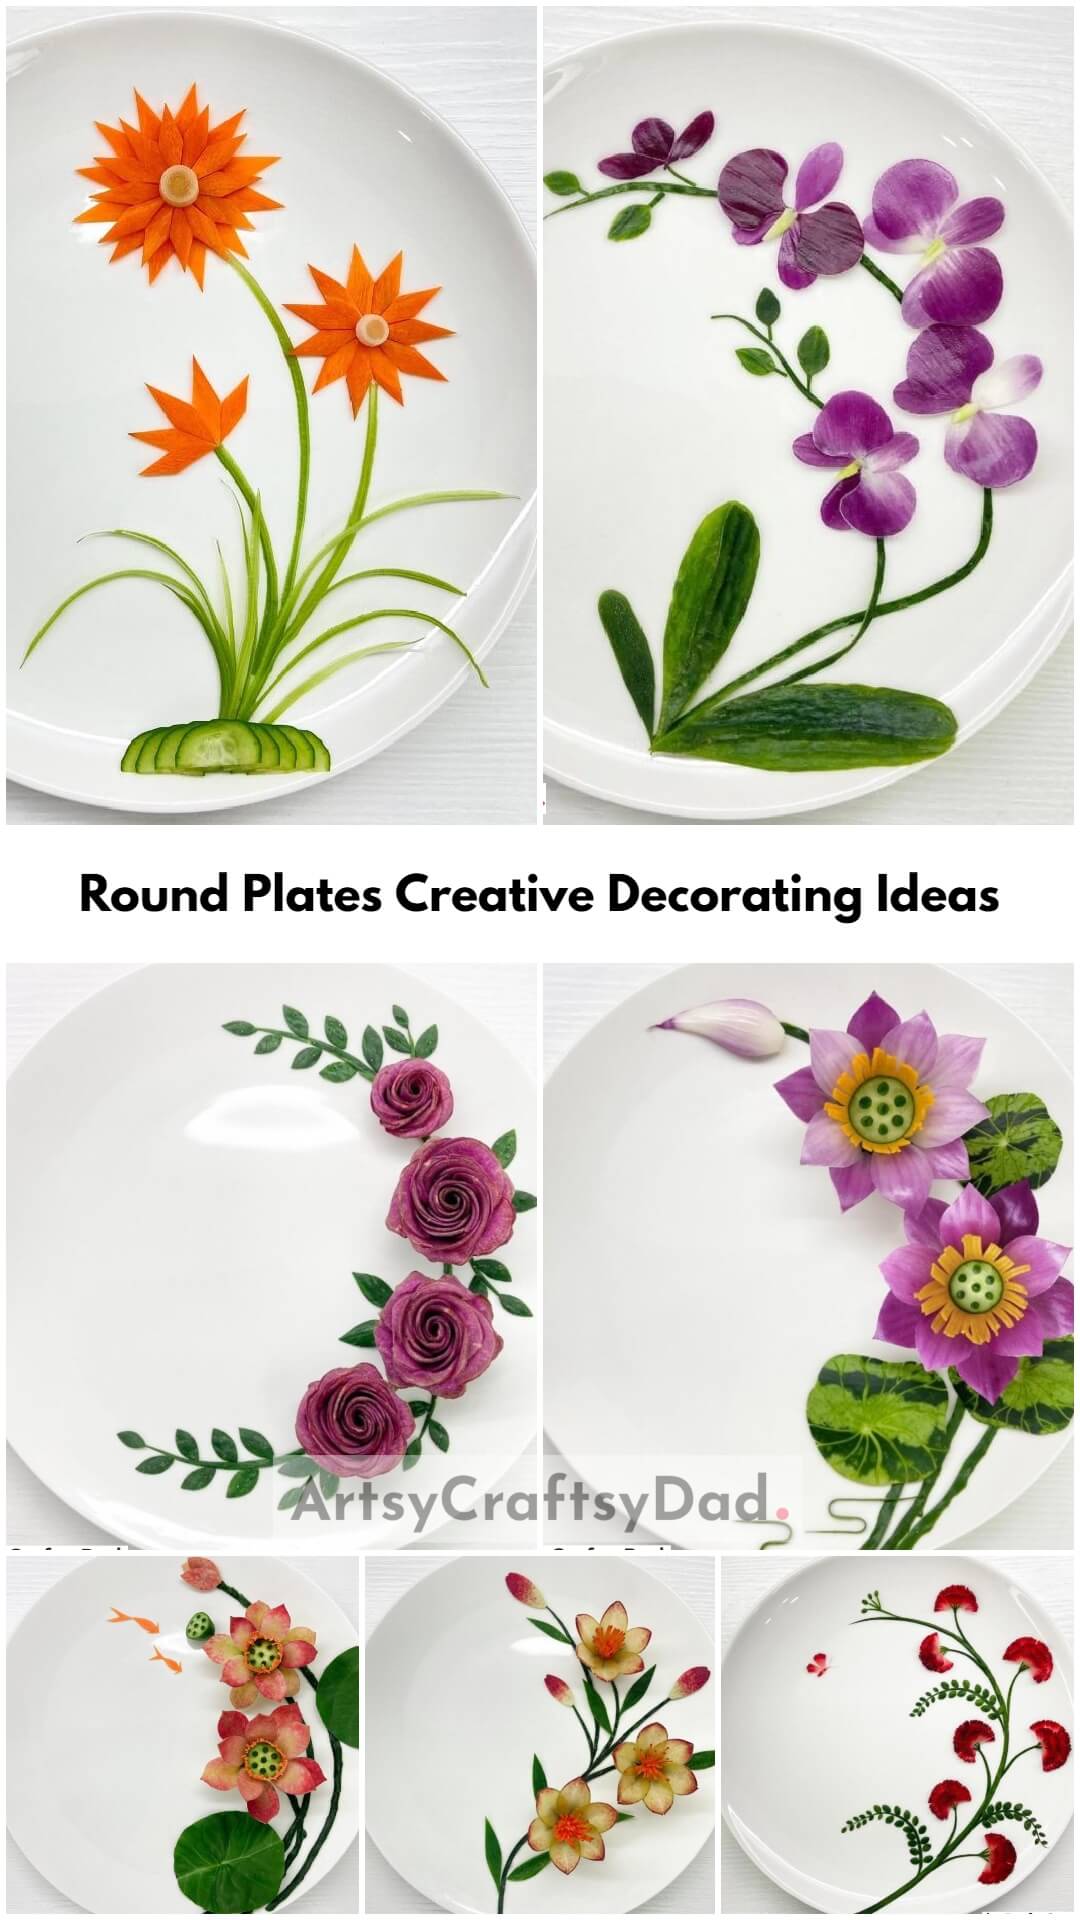  Creative Decorating Ideas for Semi-Circular Designs on Round Plates